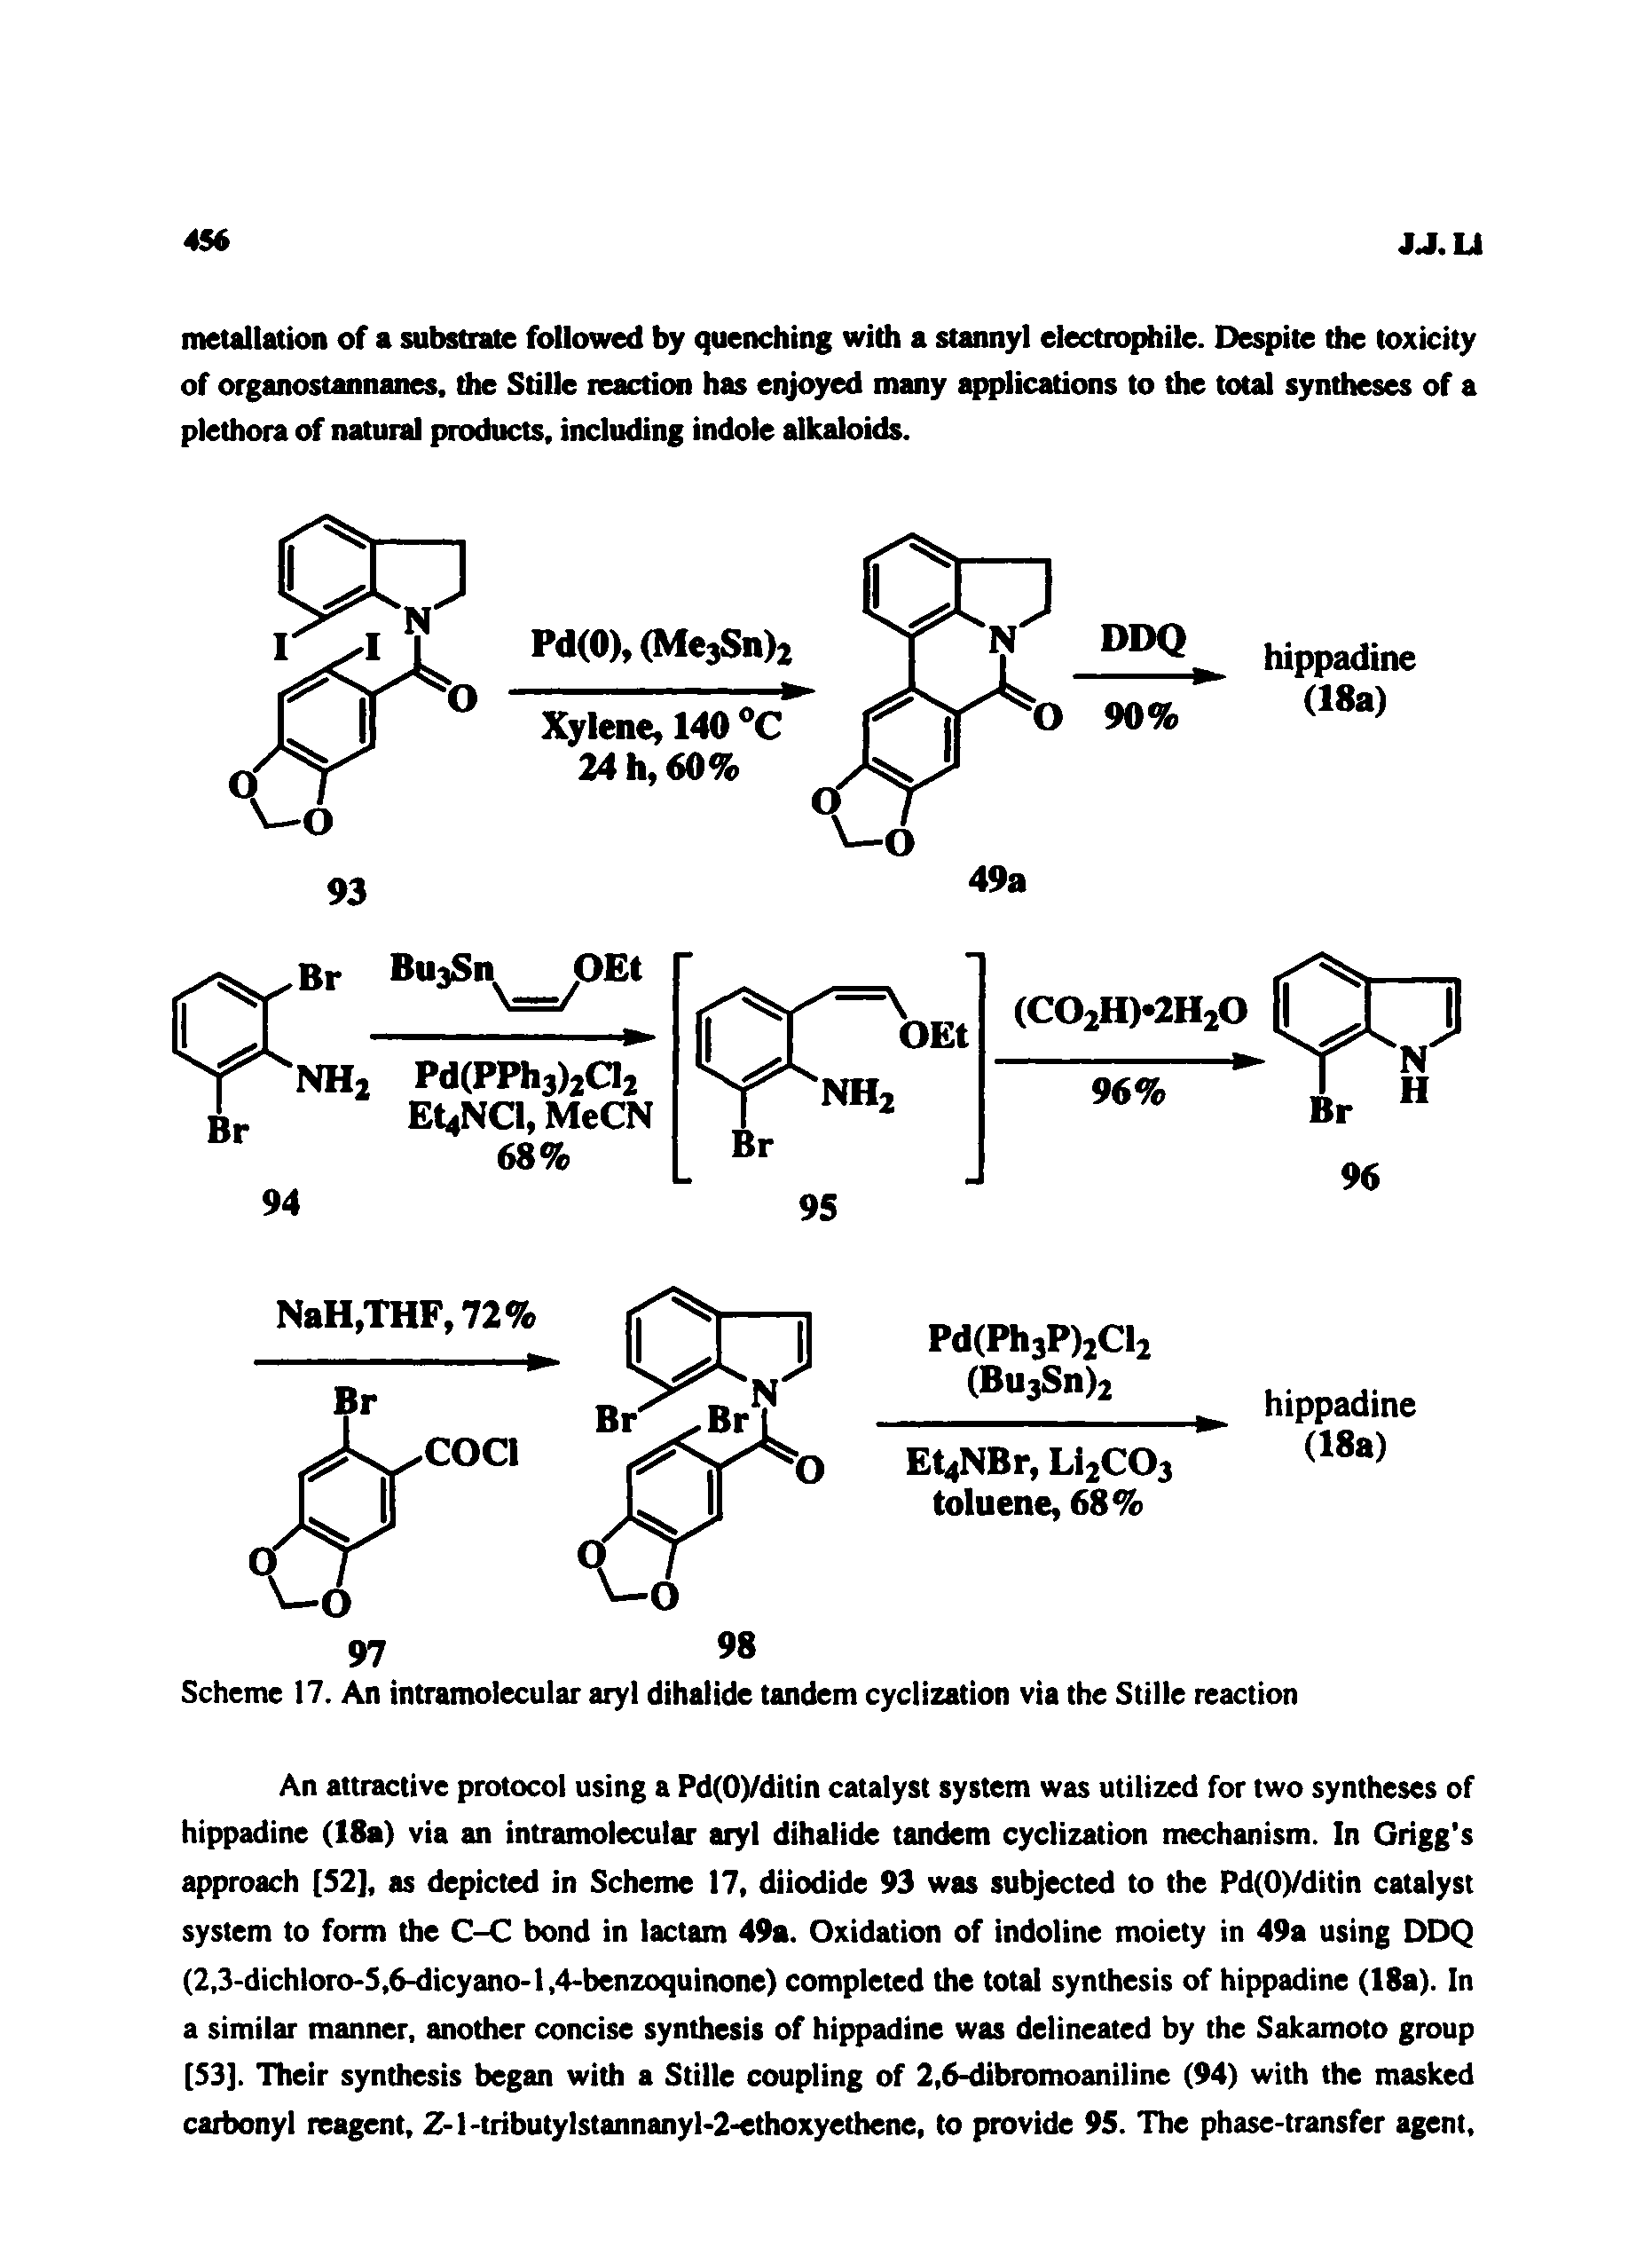 Scheme 17. An intramolecular aryl dihalide tandem cyclization via the Stille reaction...